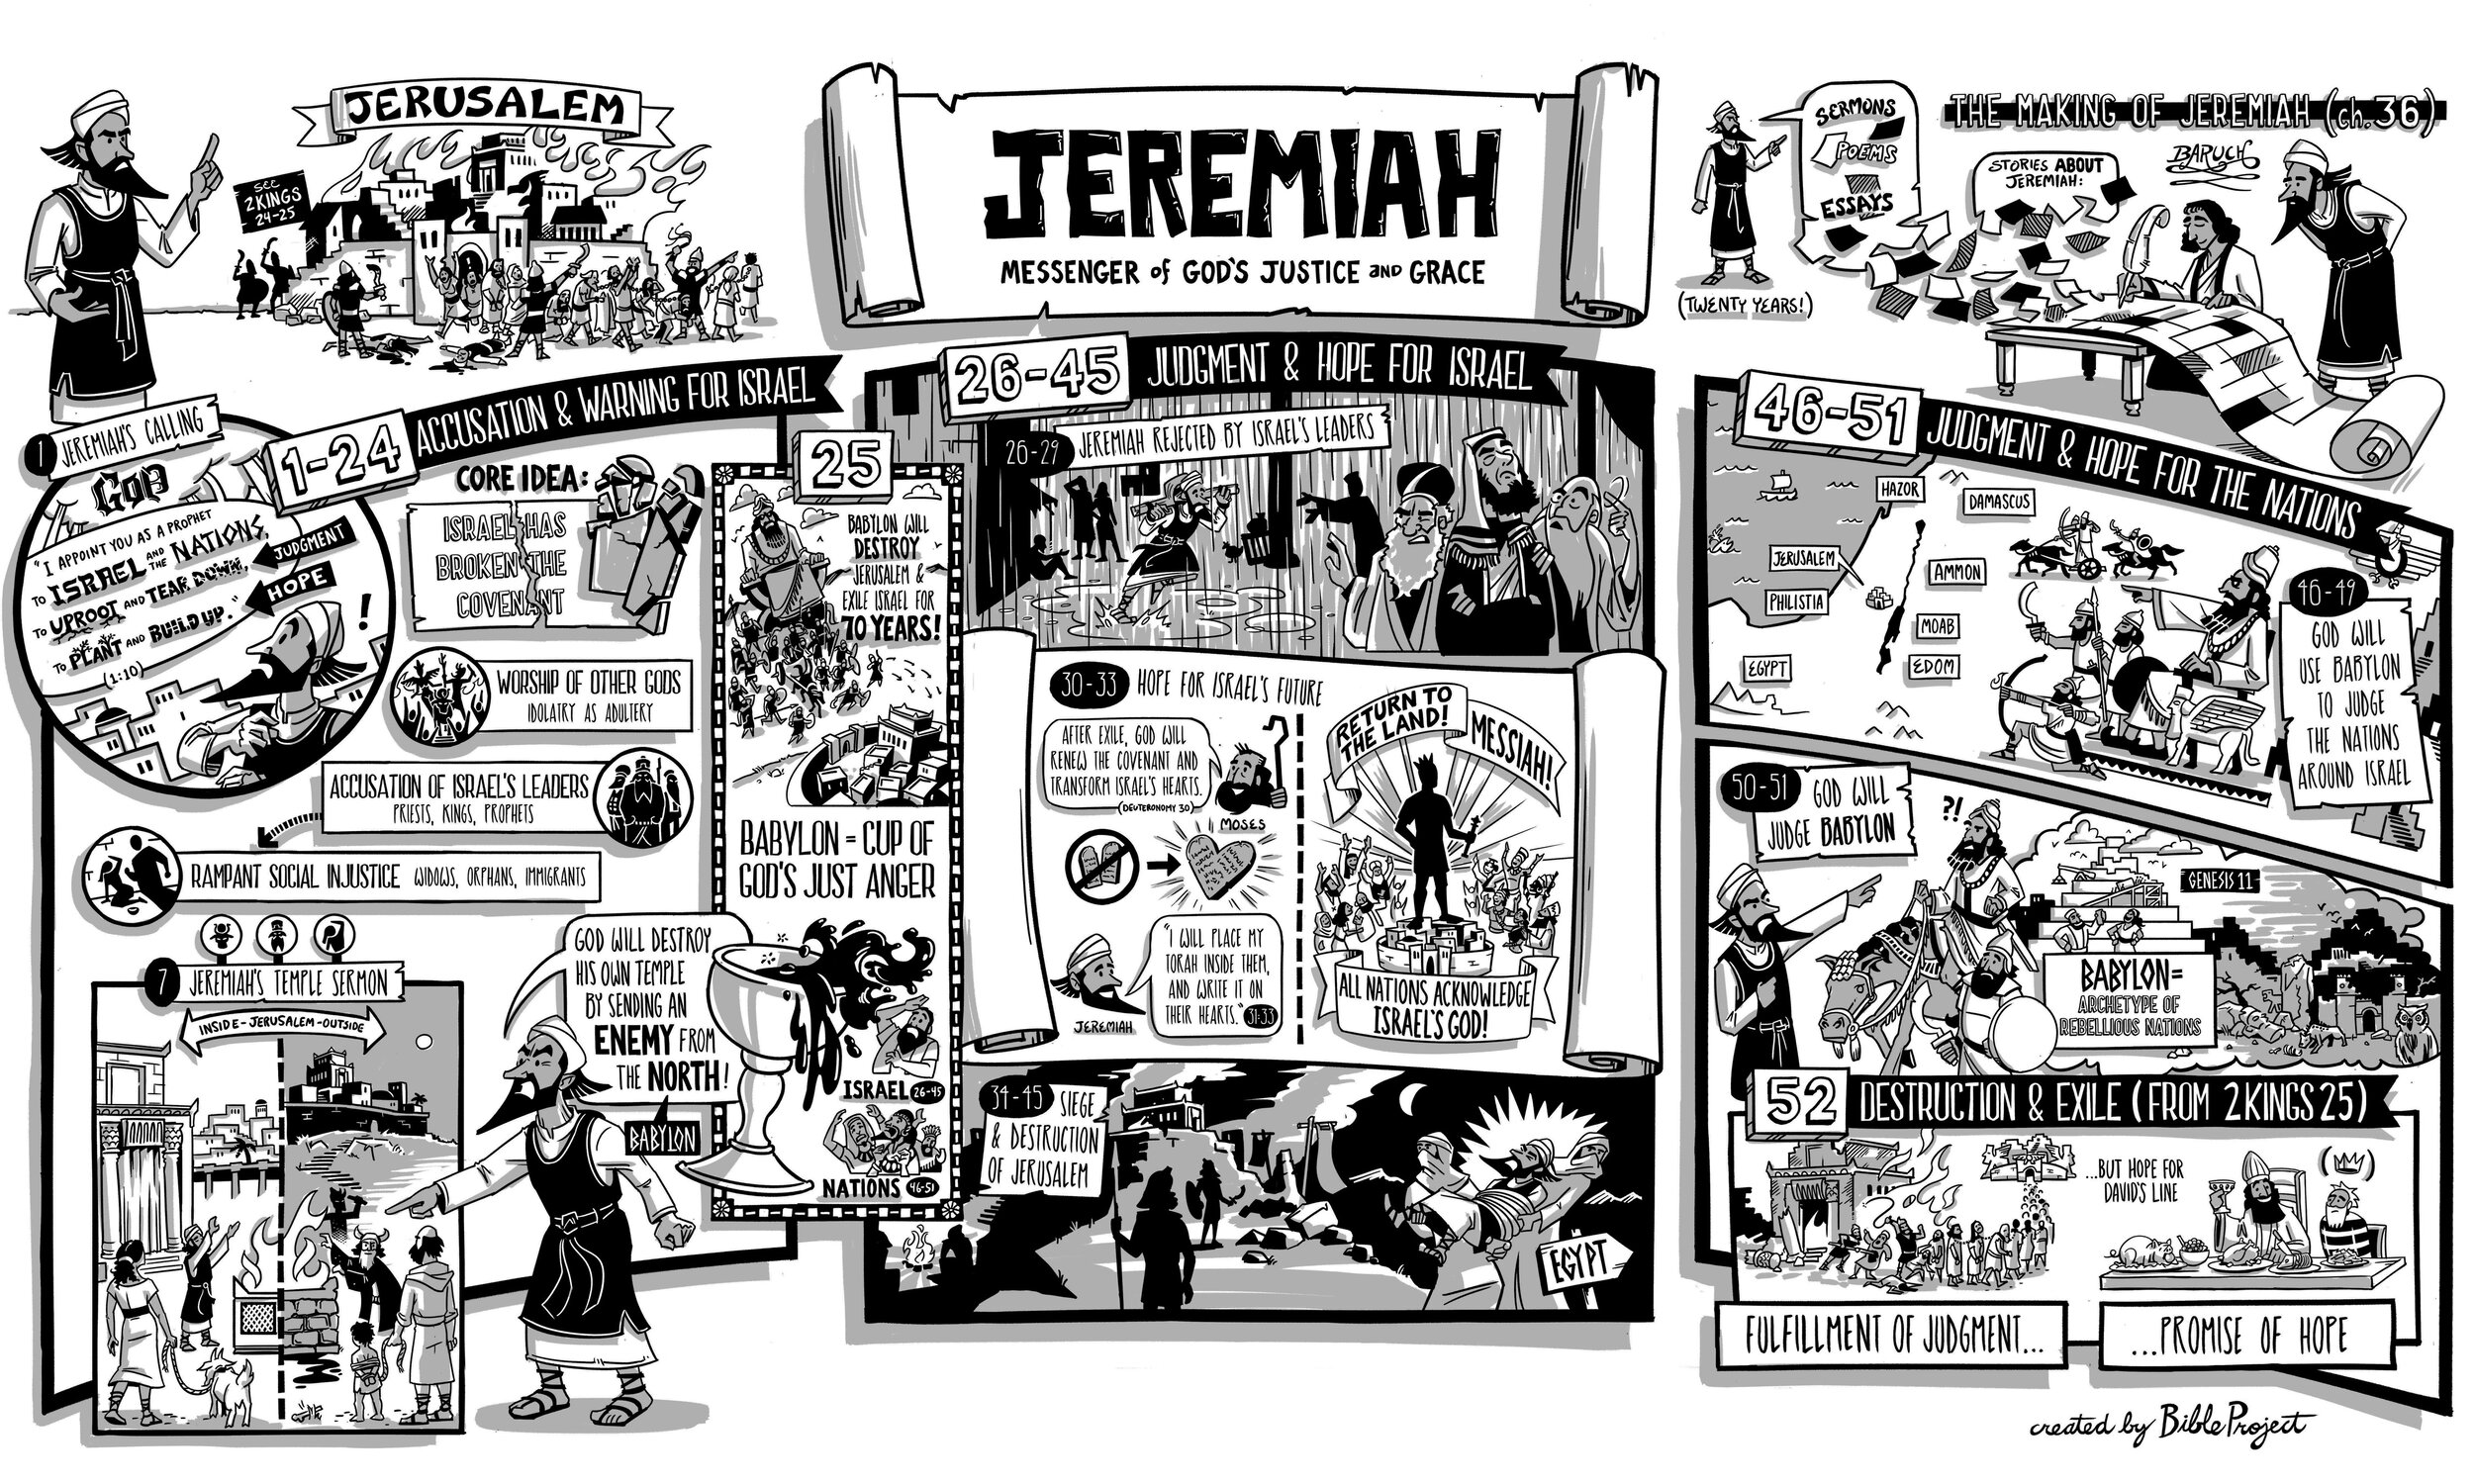 BibleProject: Jeremiah (Video)